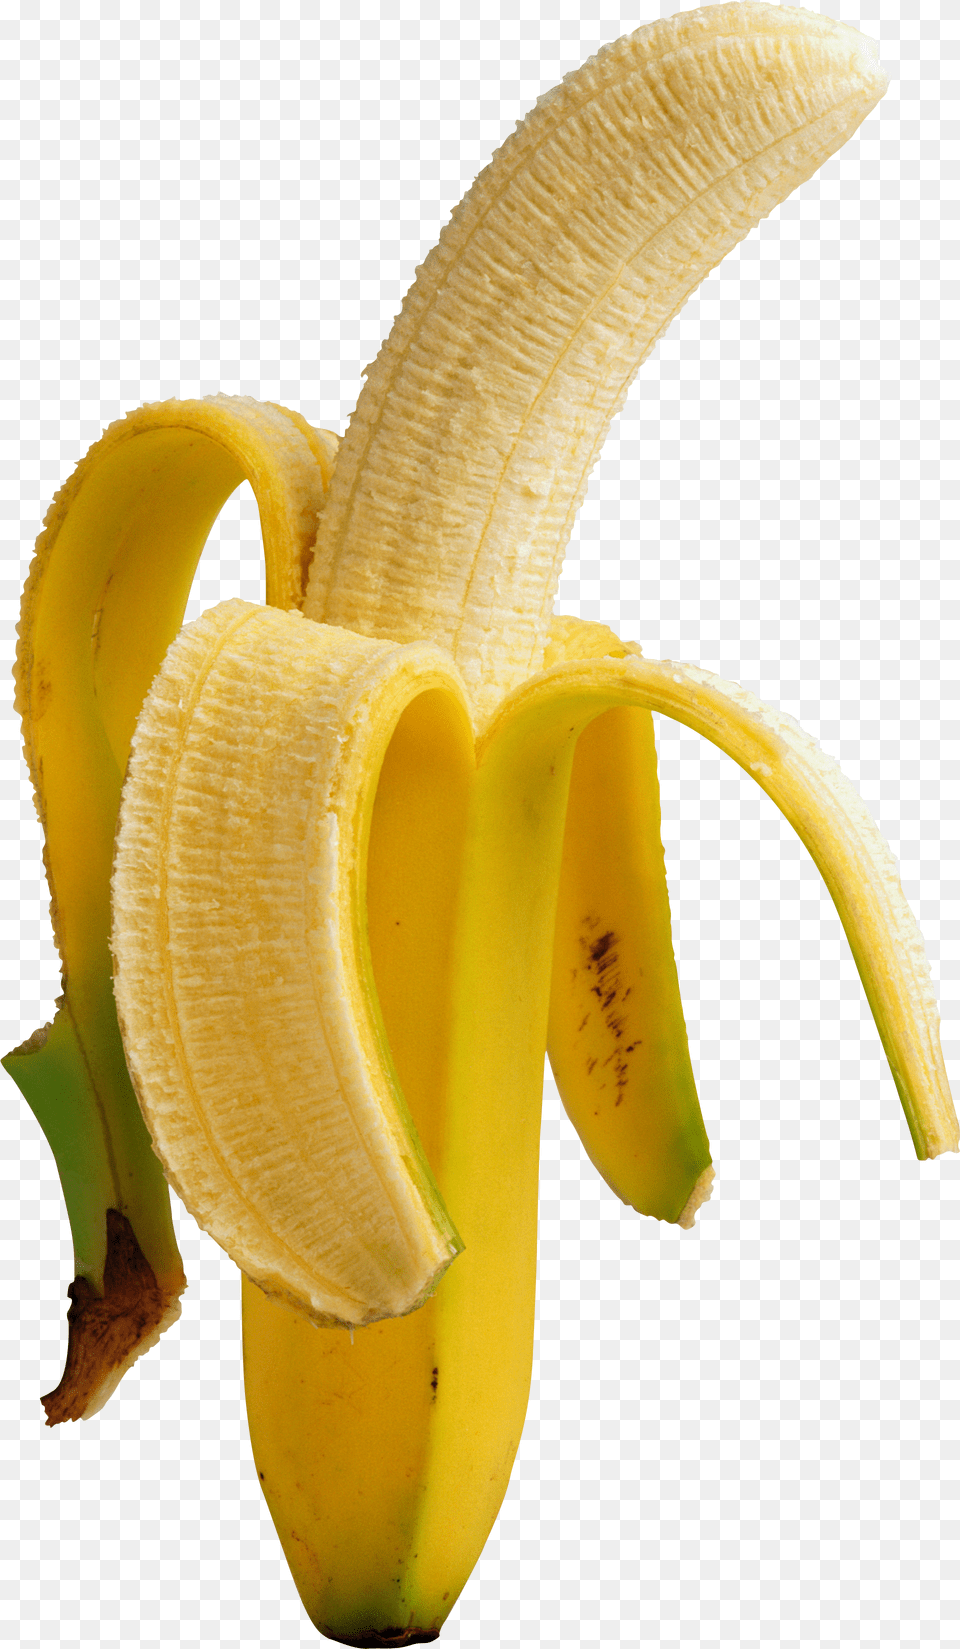 Open Banana Clip Arts Transparent Background Banana, Food, Fruit, Plant, Produce Png